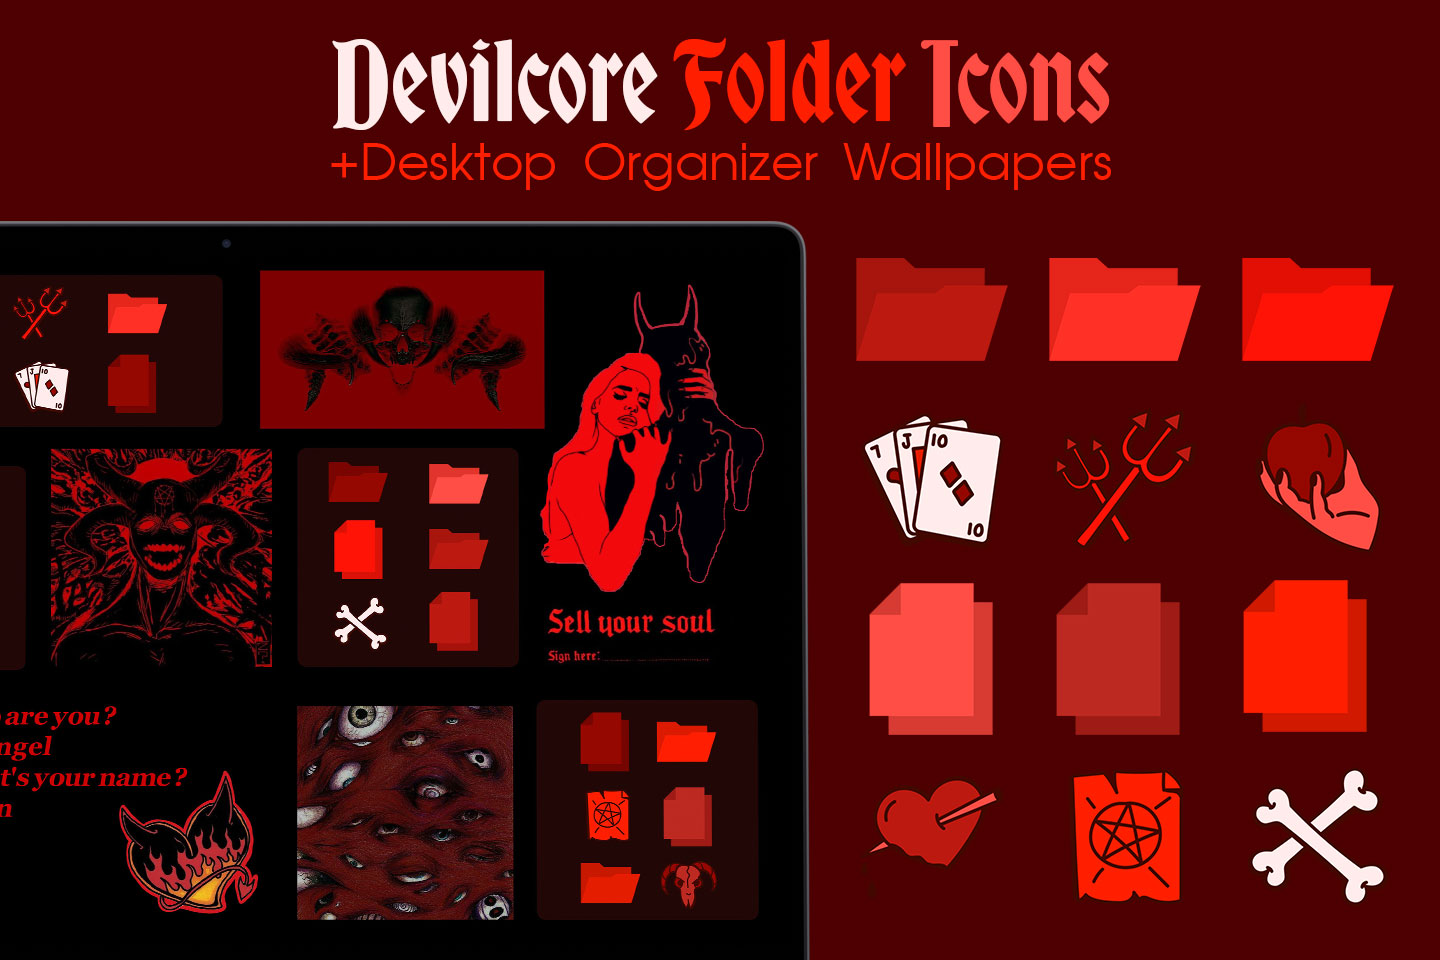 devilcore folder icons pack